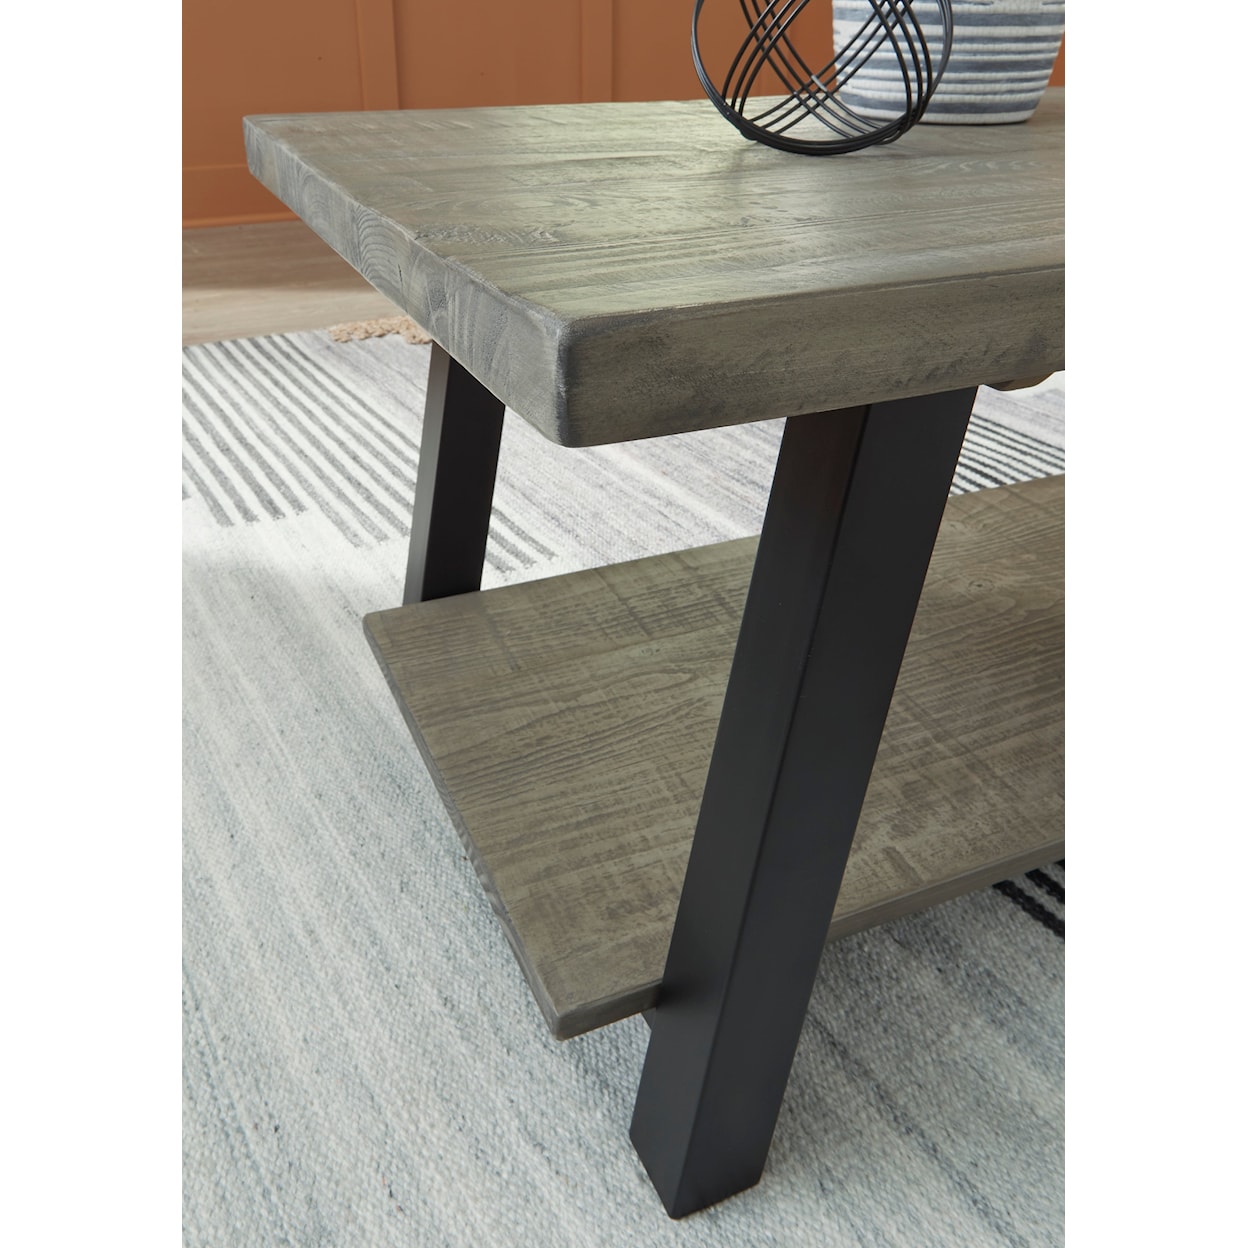 Ashley Furniture Signature Design Brennegan Coffee Table